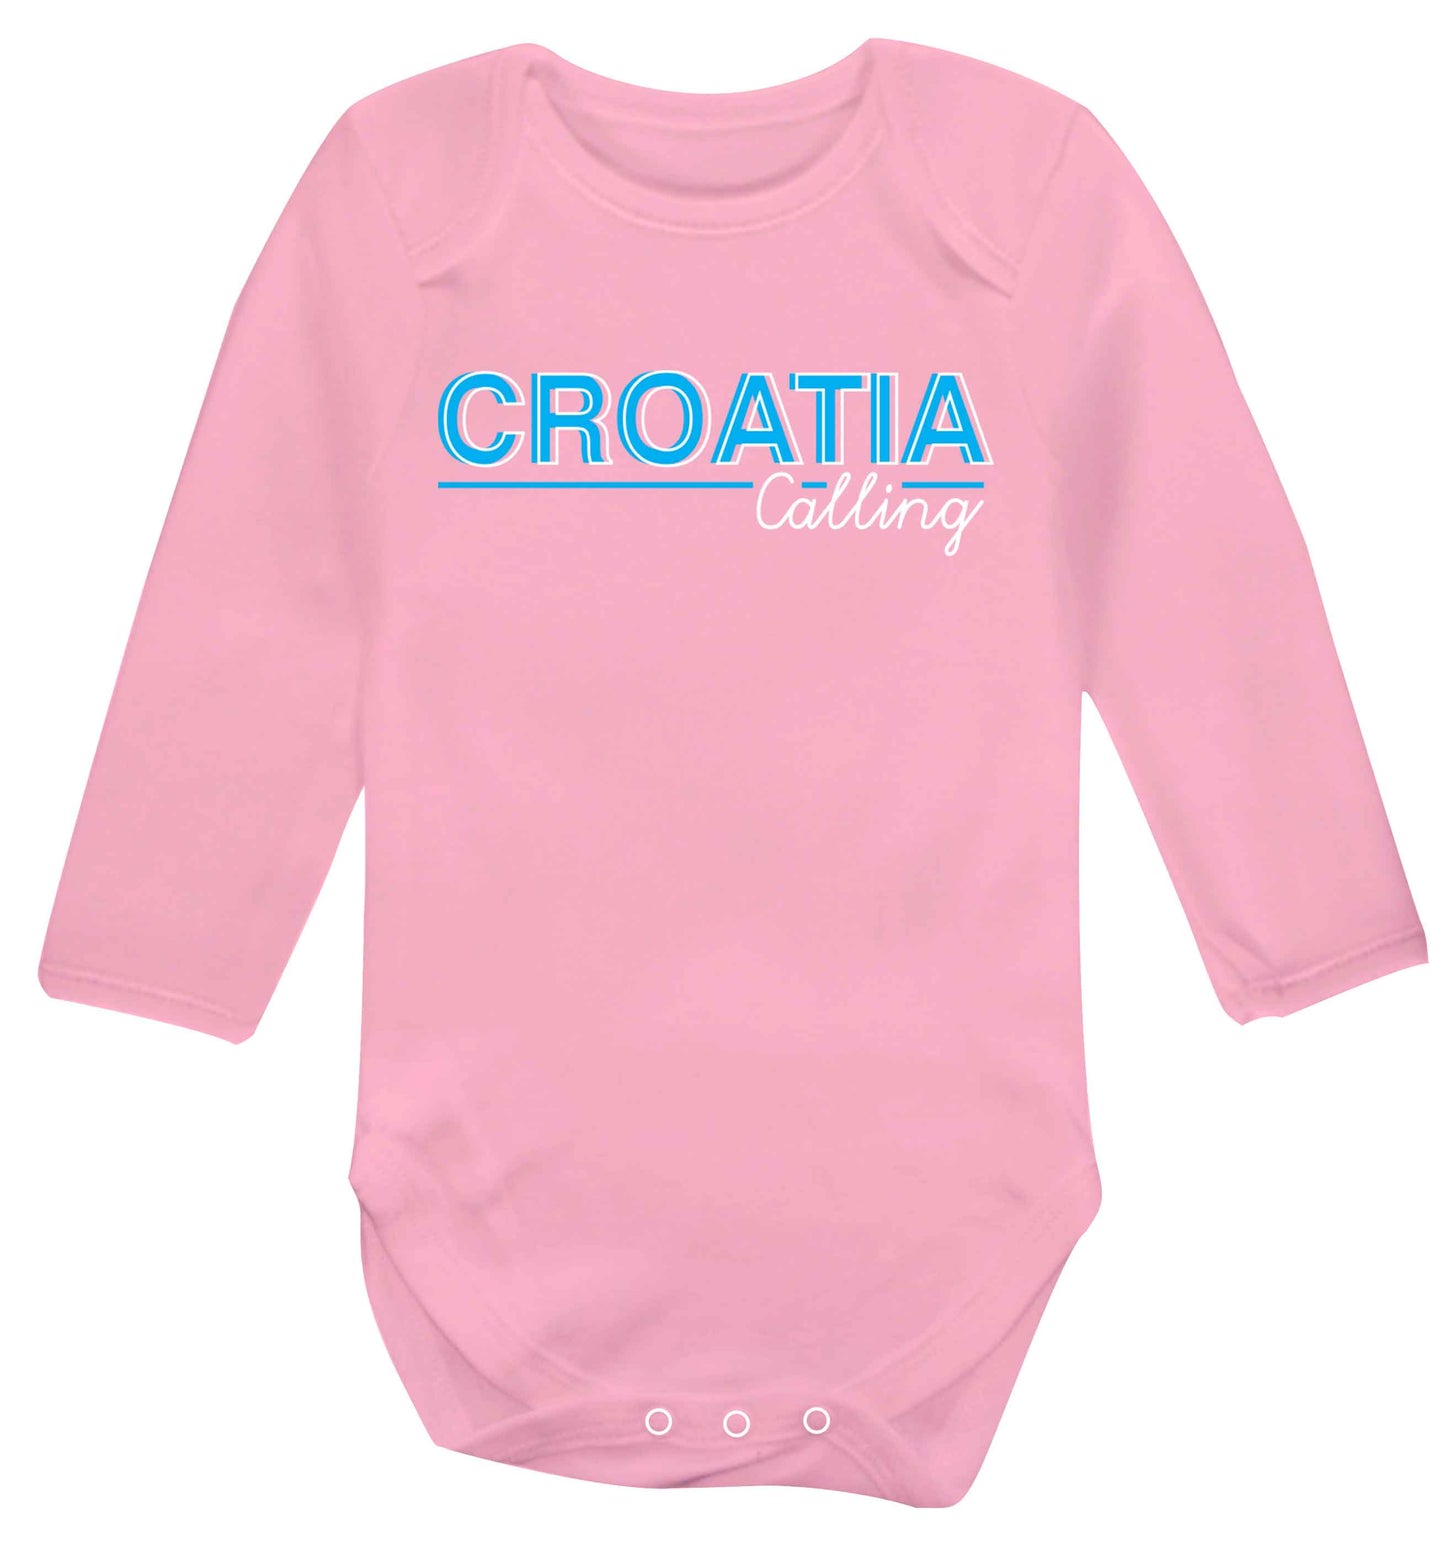 Croatia calling Baby Vest long sleeved pale pink 6-12 months